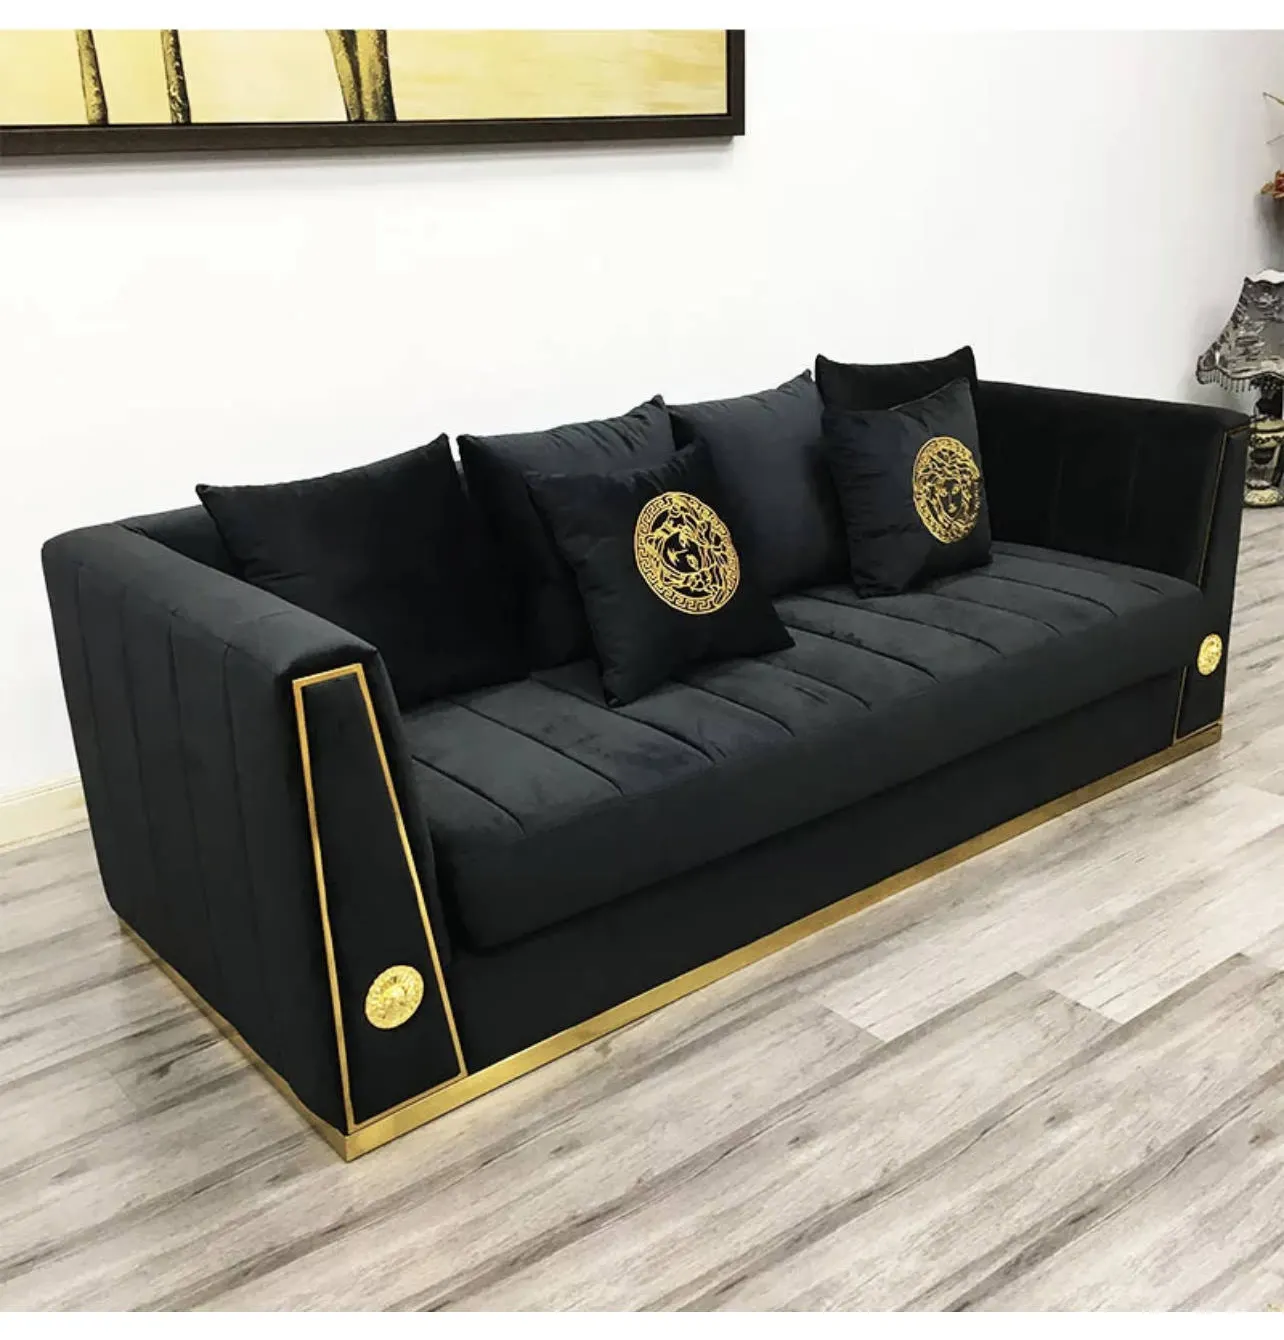 Stainless Steel Furniture Hardware Parts Golden Luxury Armrest Frame For Sofa Decorative